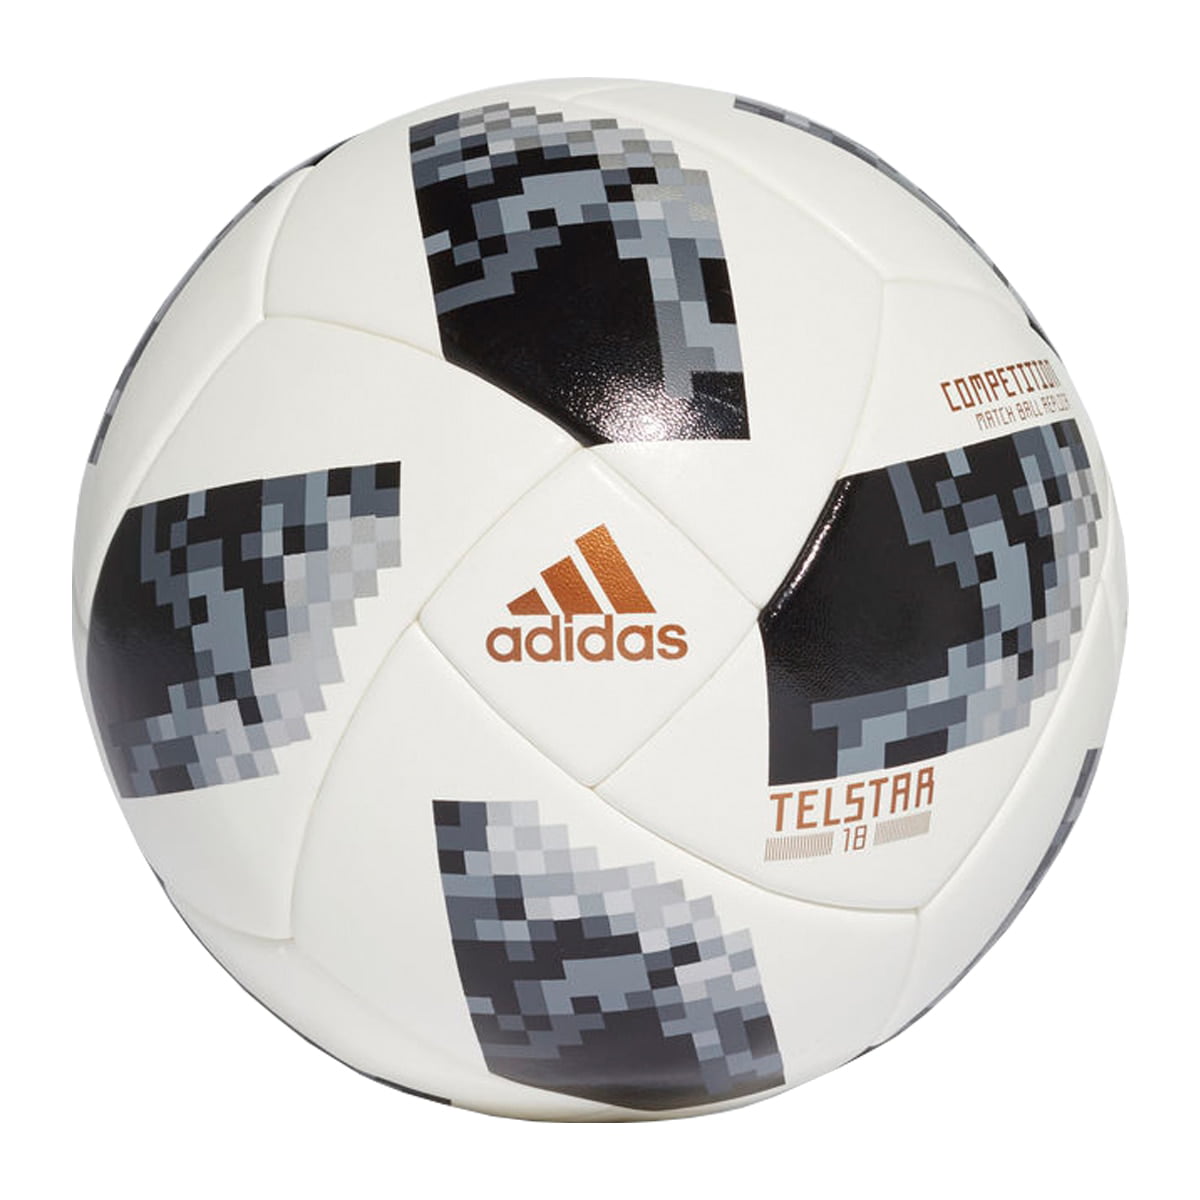 Adidas 2018 World Cup Competition Soccer Ball, Size 5 - Walmart.com -  Walmart.com